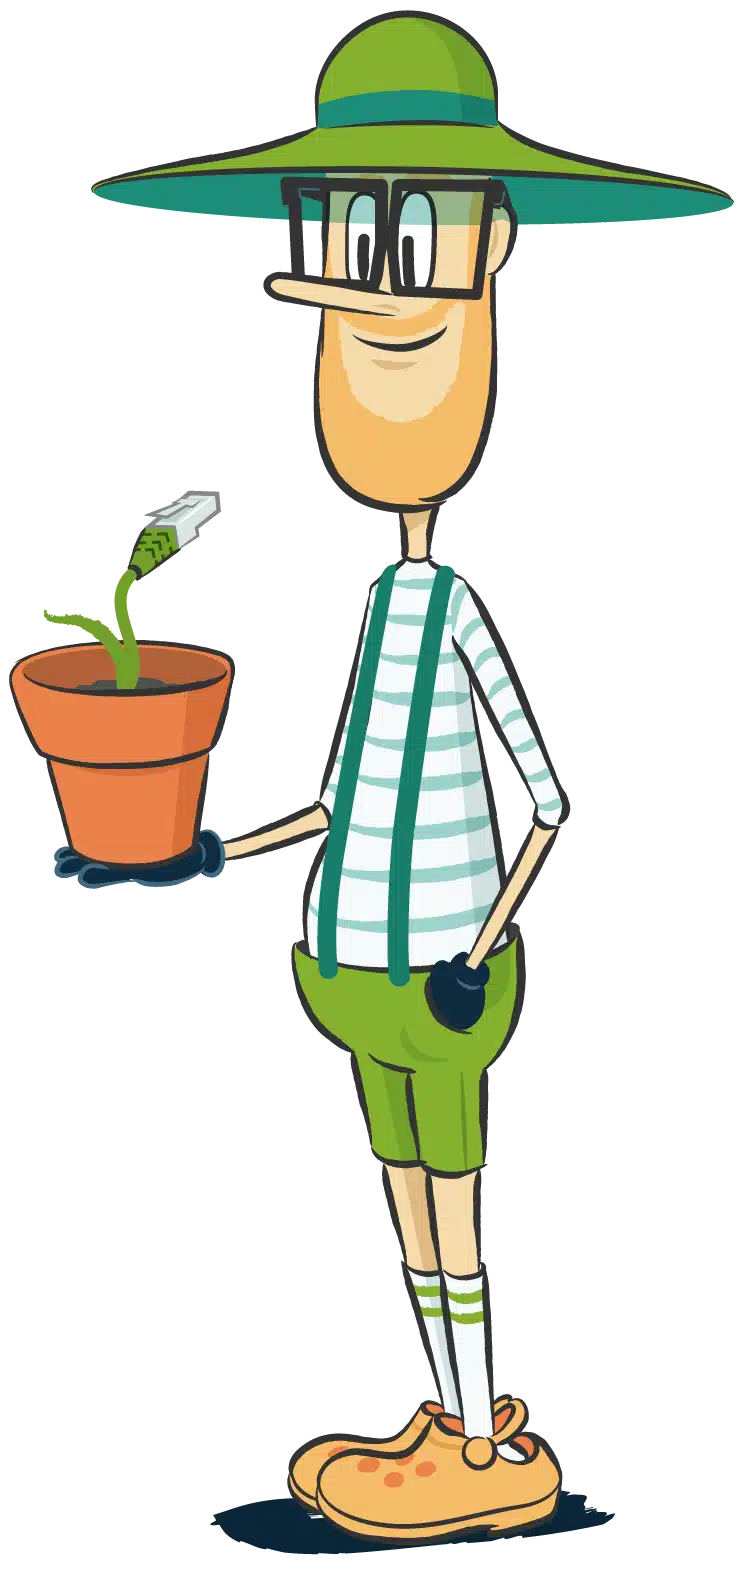 The mascot Gerry the website gardener (illustration by Nils Kalk)